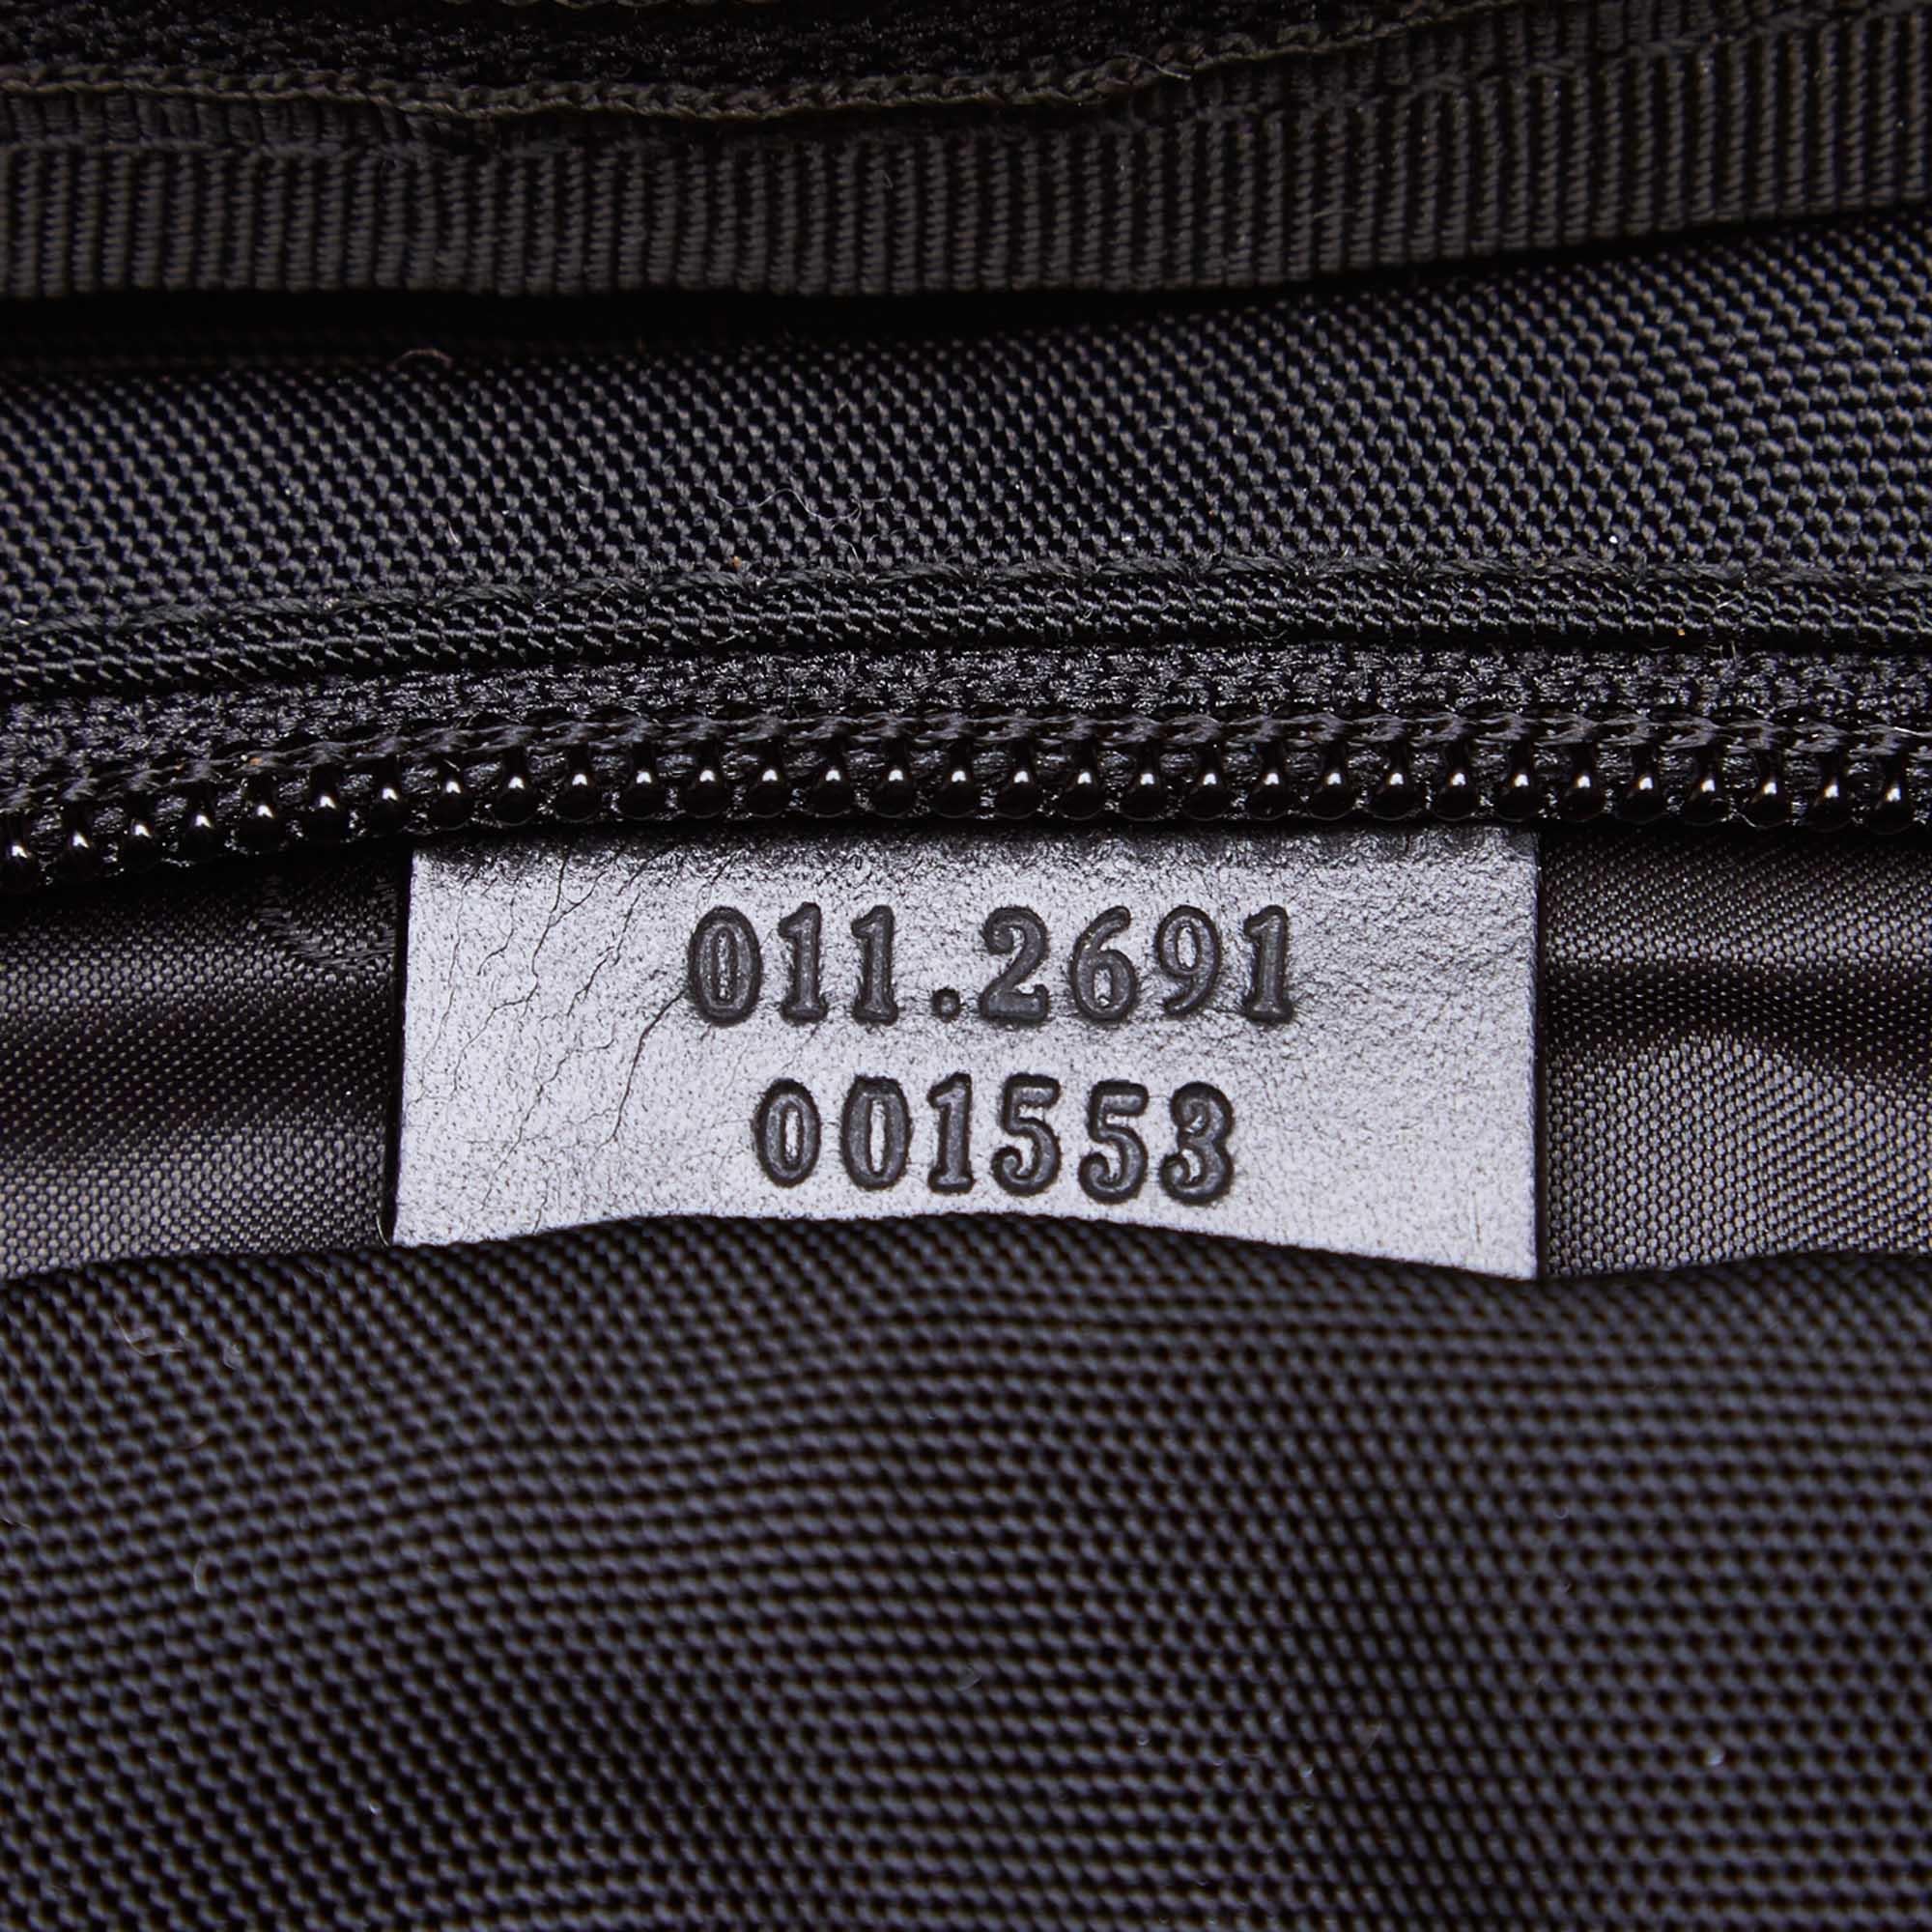 Vintage Authentic Gucci Black Nylon Fabric Garment Bag Italy LARGE  3